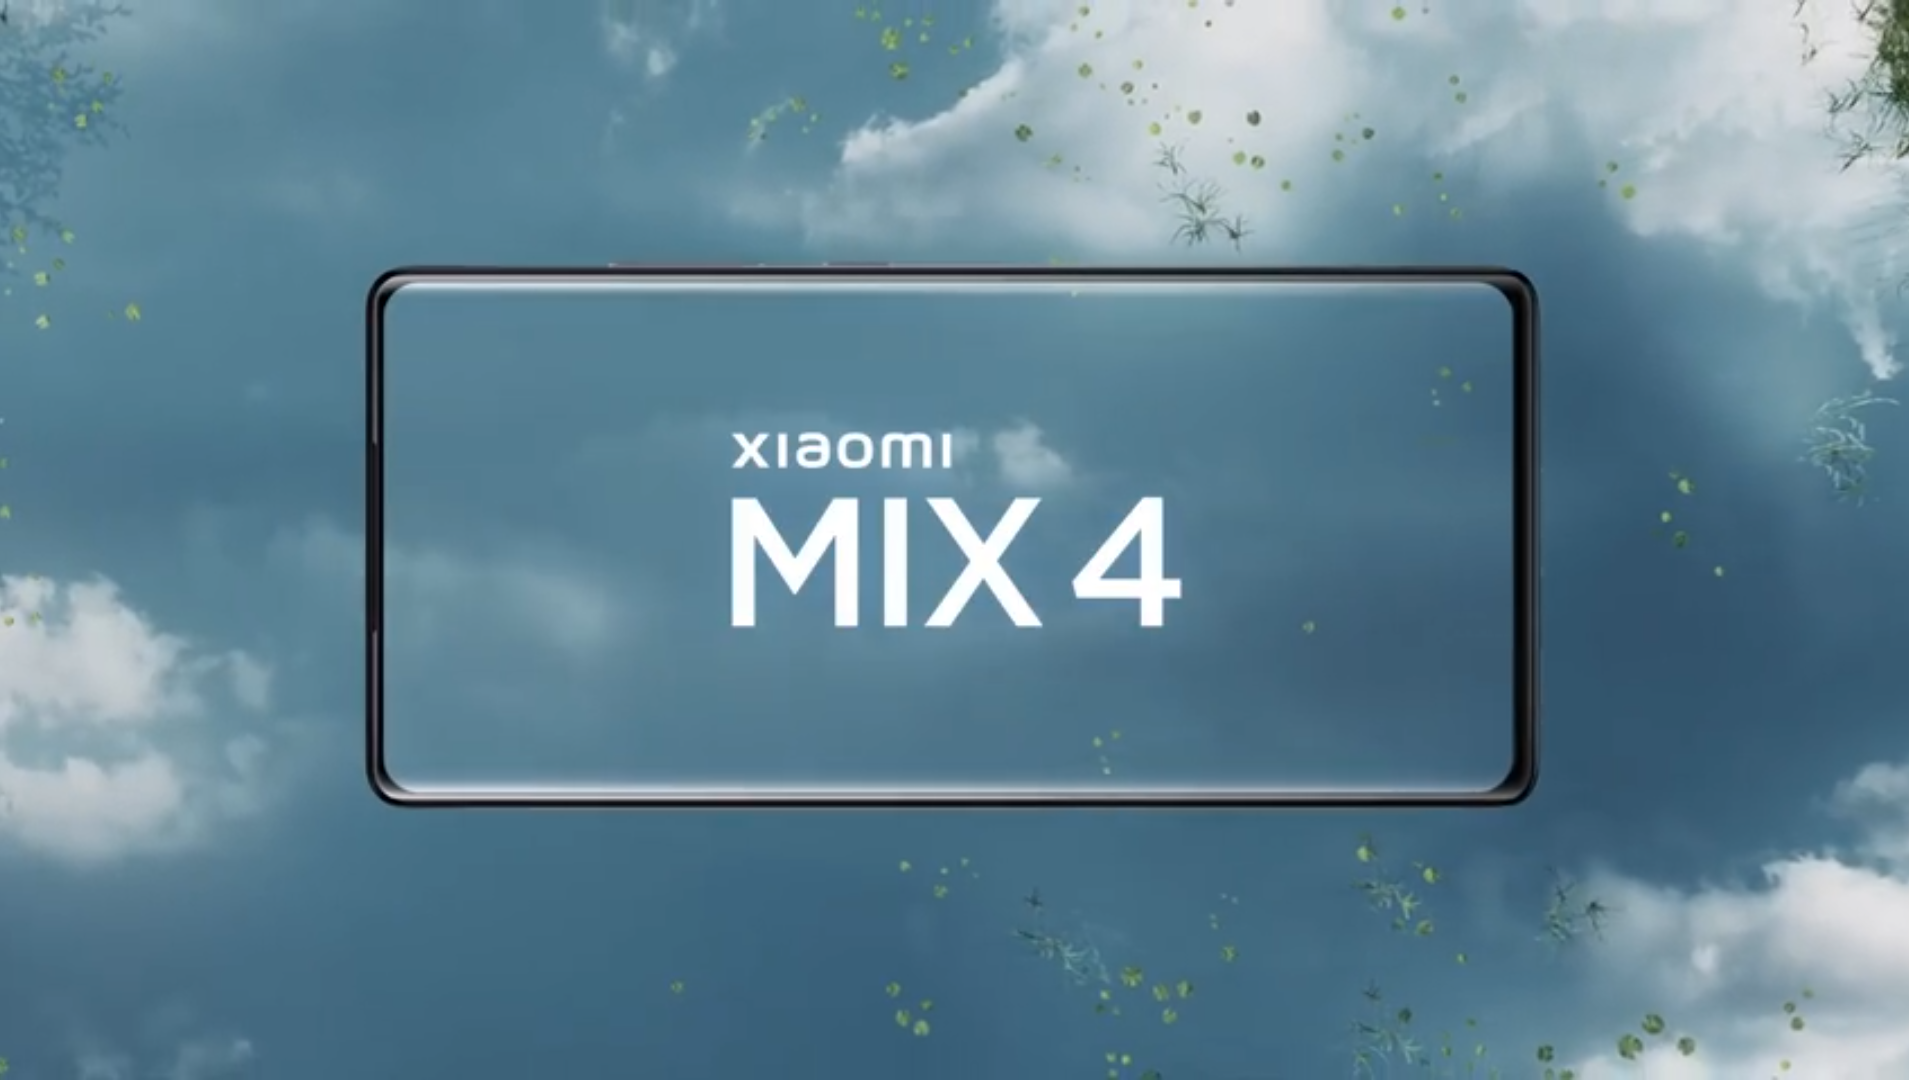 Xiaomi Mi Mix 4 rumor roundup: Specs, Price, Colors, More - What to - Gizmochina